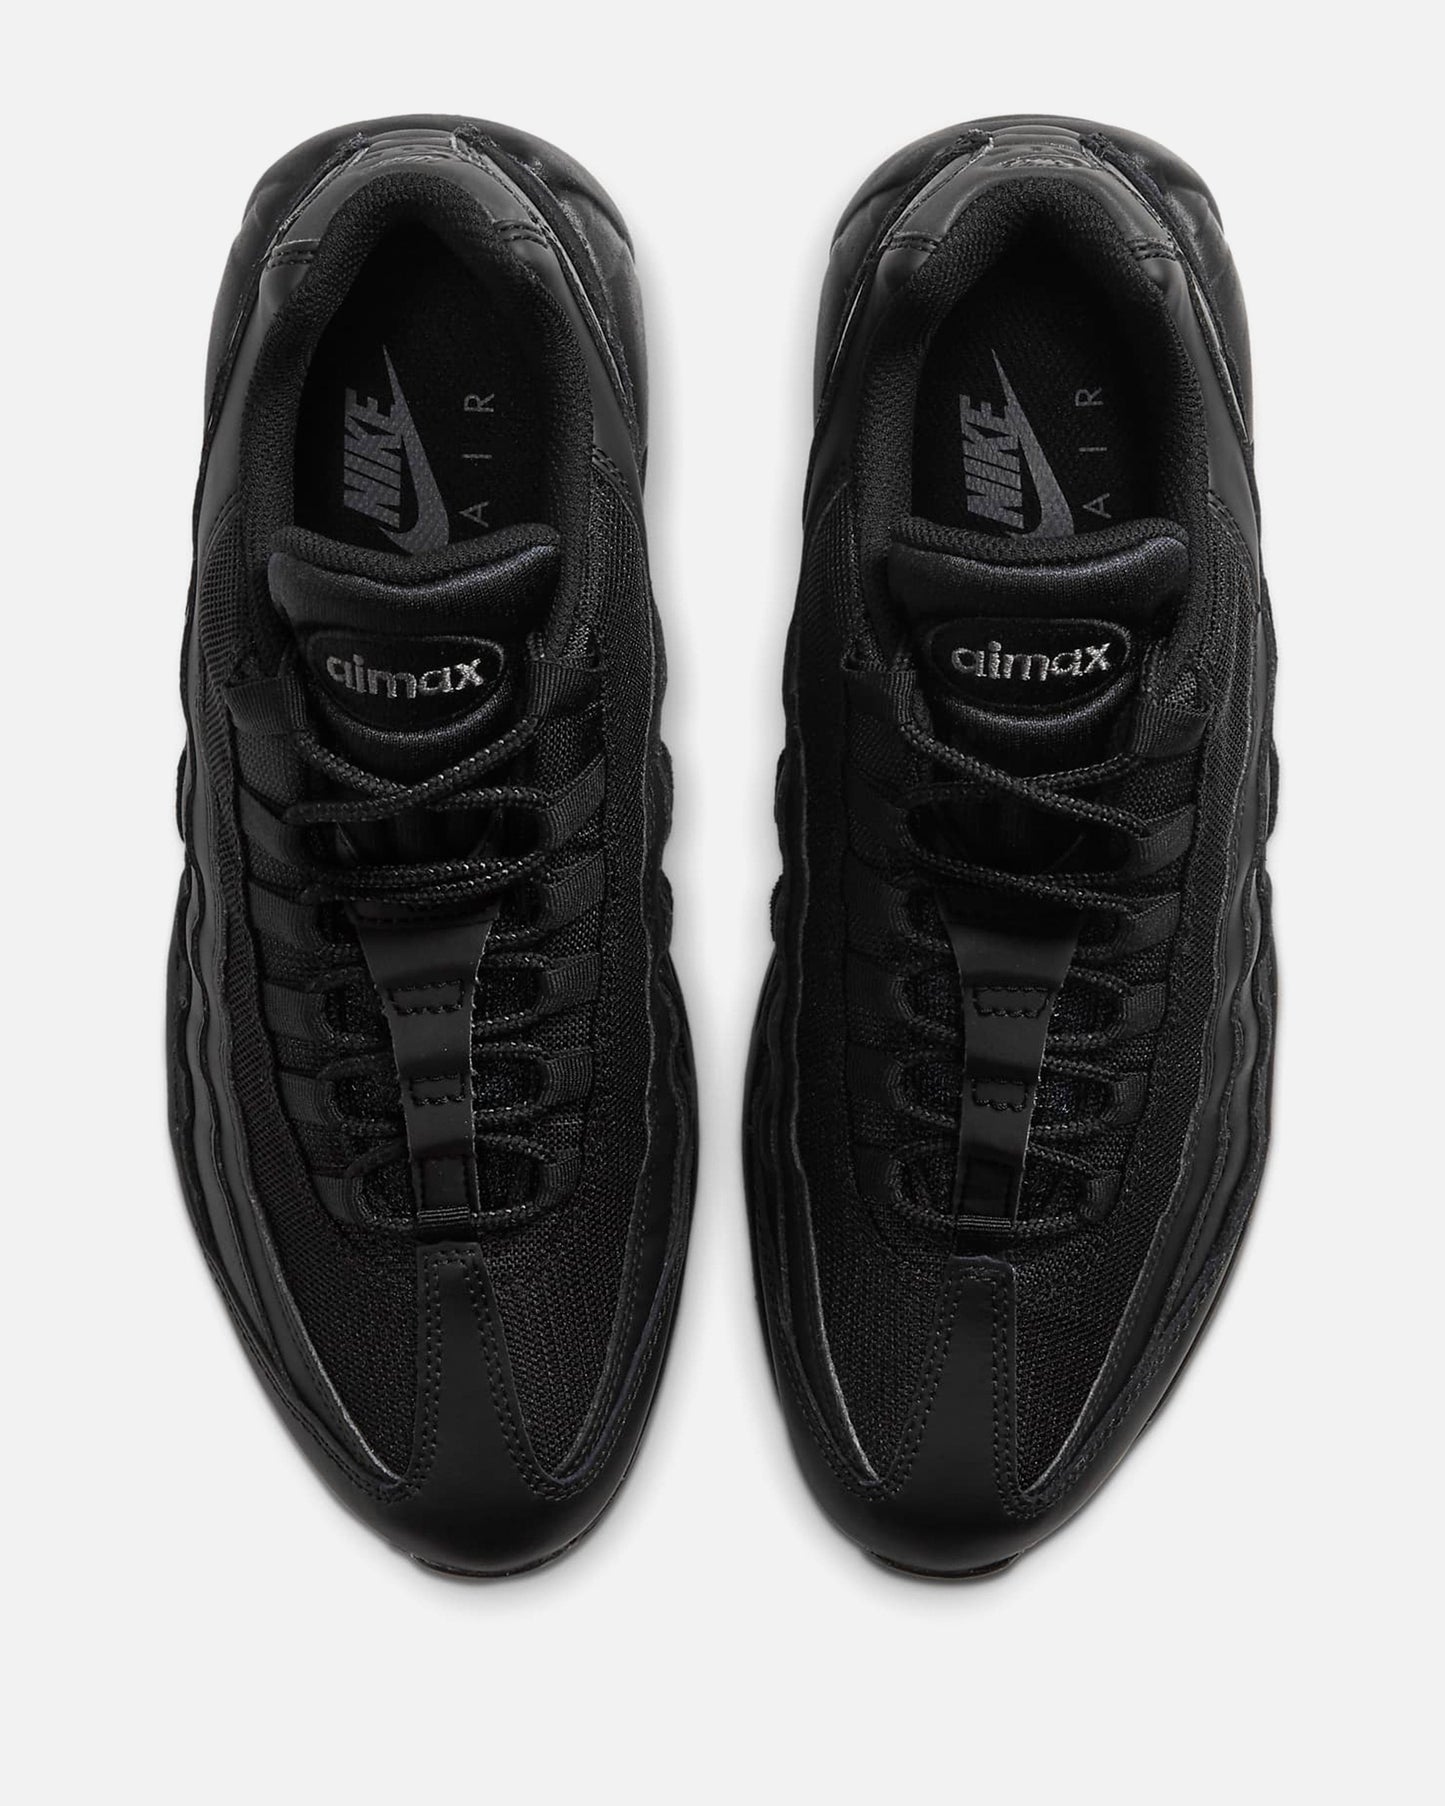 Nike Men's Shoes Air Max 95 Essential 'Black/Black-DarkGrey'